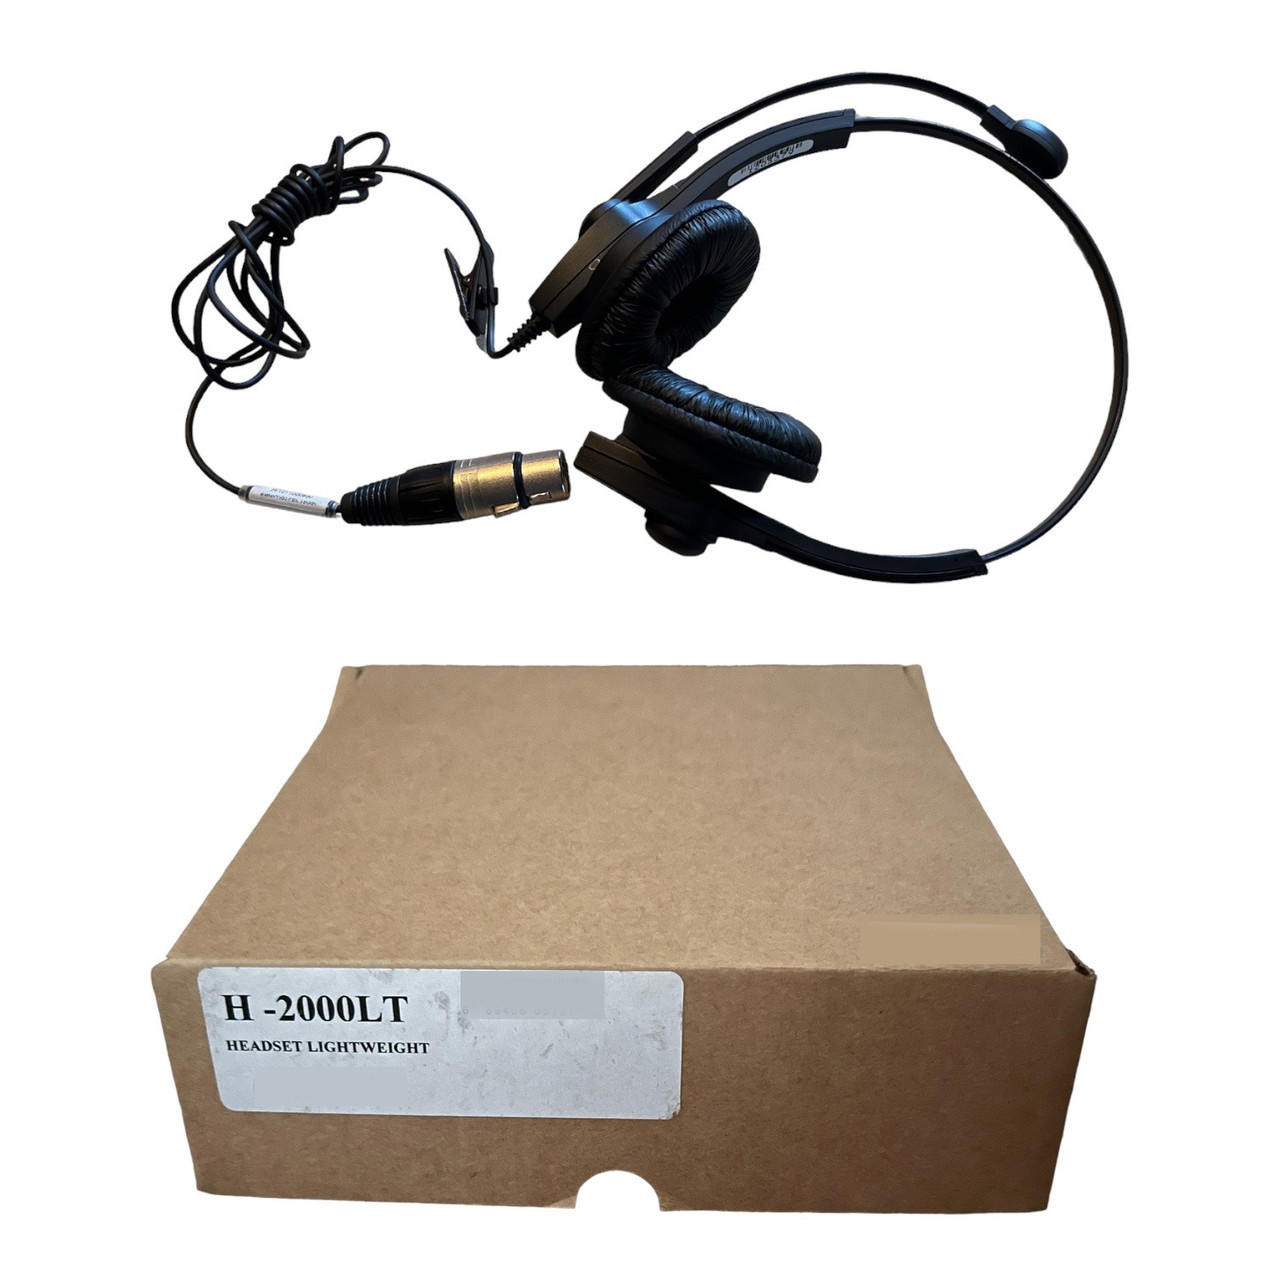  Anchor Audio H-2000LT PortaCom and Prolink Intercom Headset 